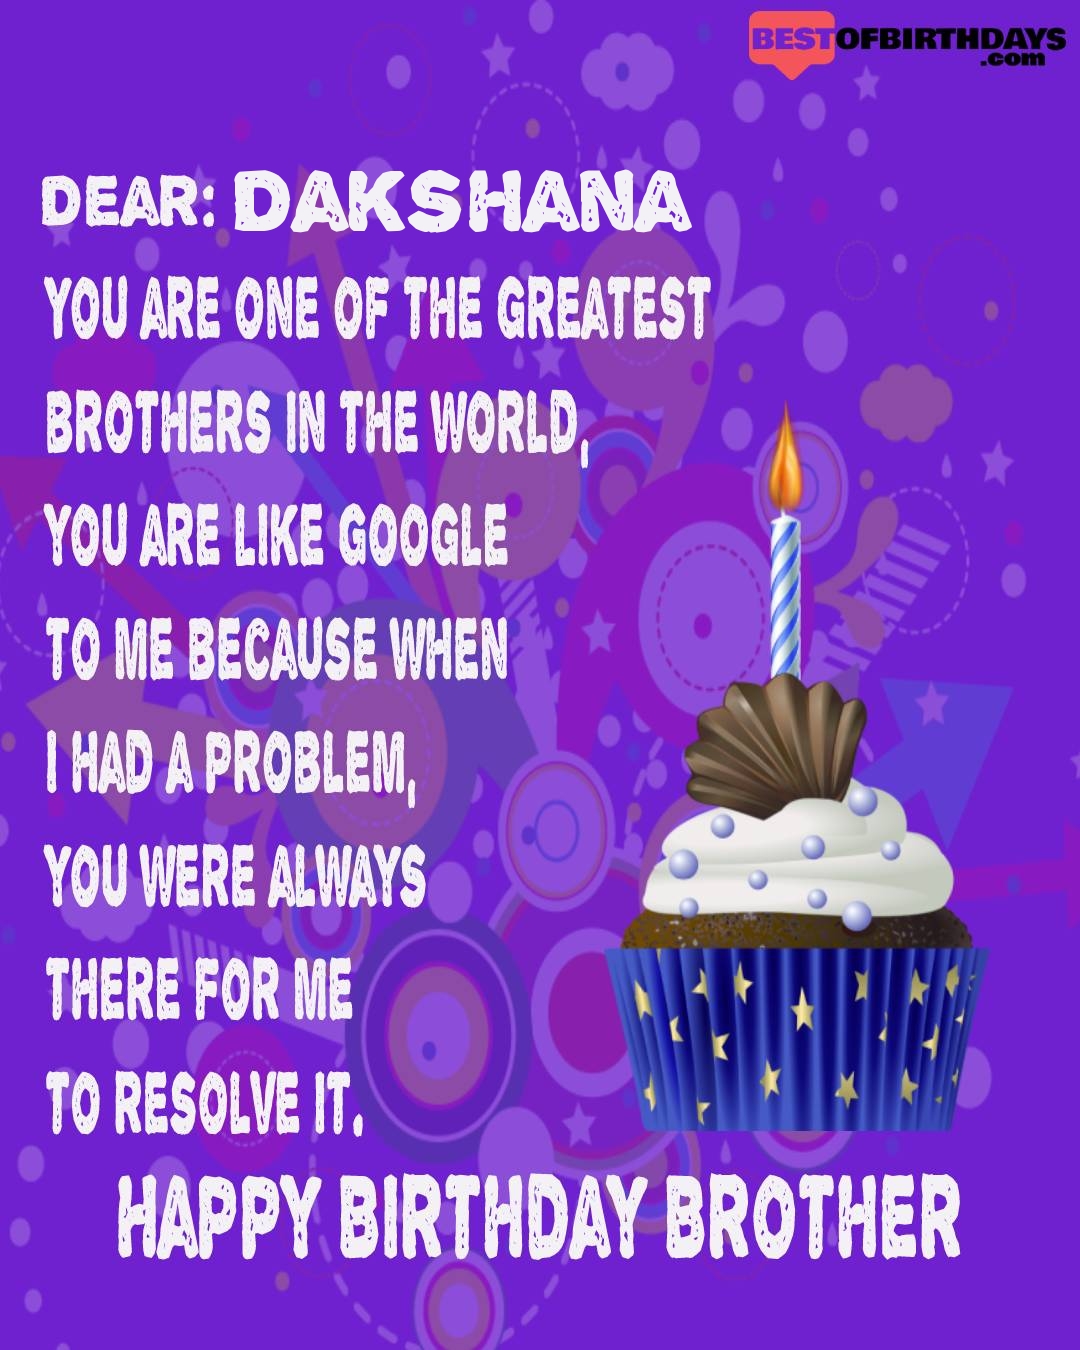 Happy birthday dakshana bhai brother bro